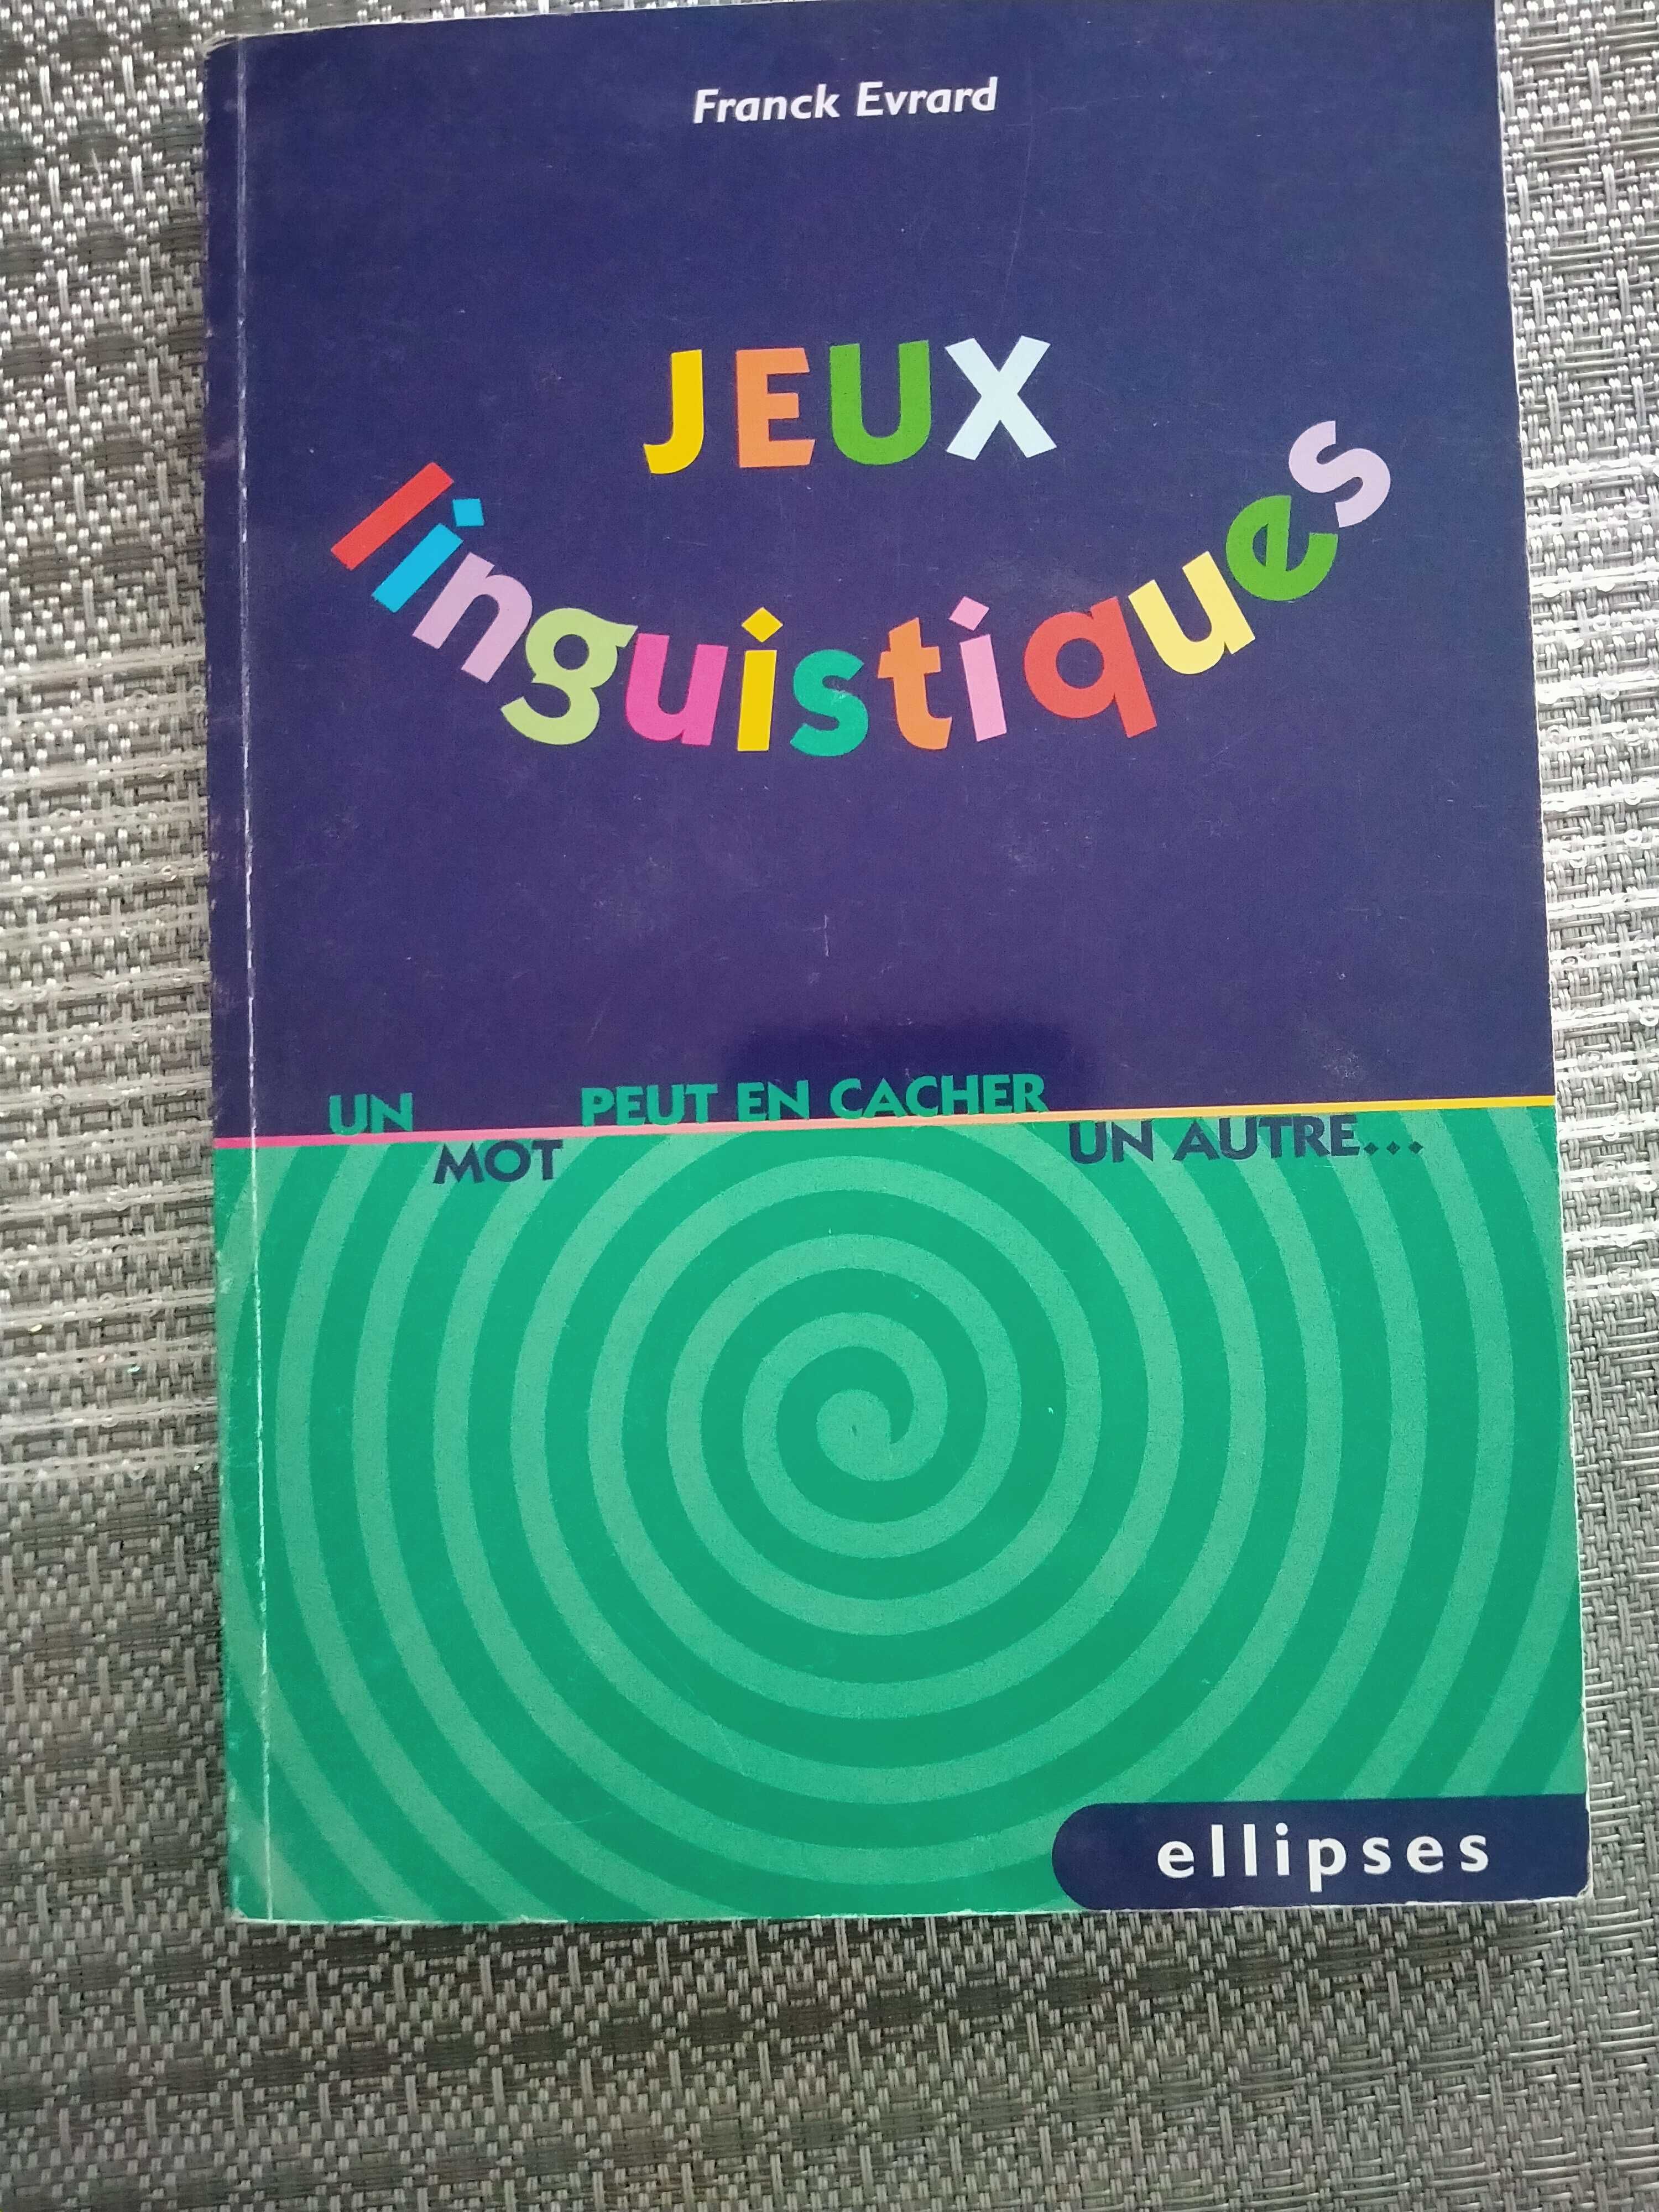 Jeux linguistiques, Franck Evrard, wydawnictwa ellipses